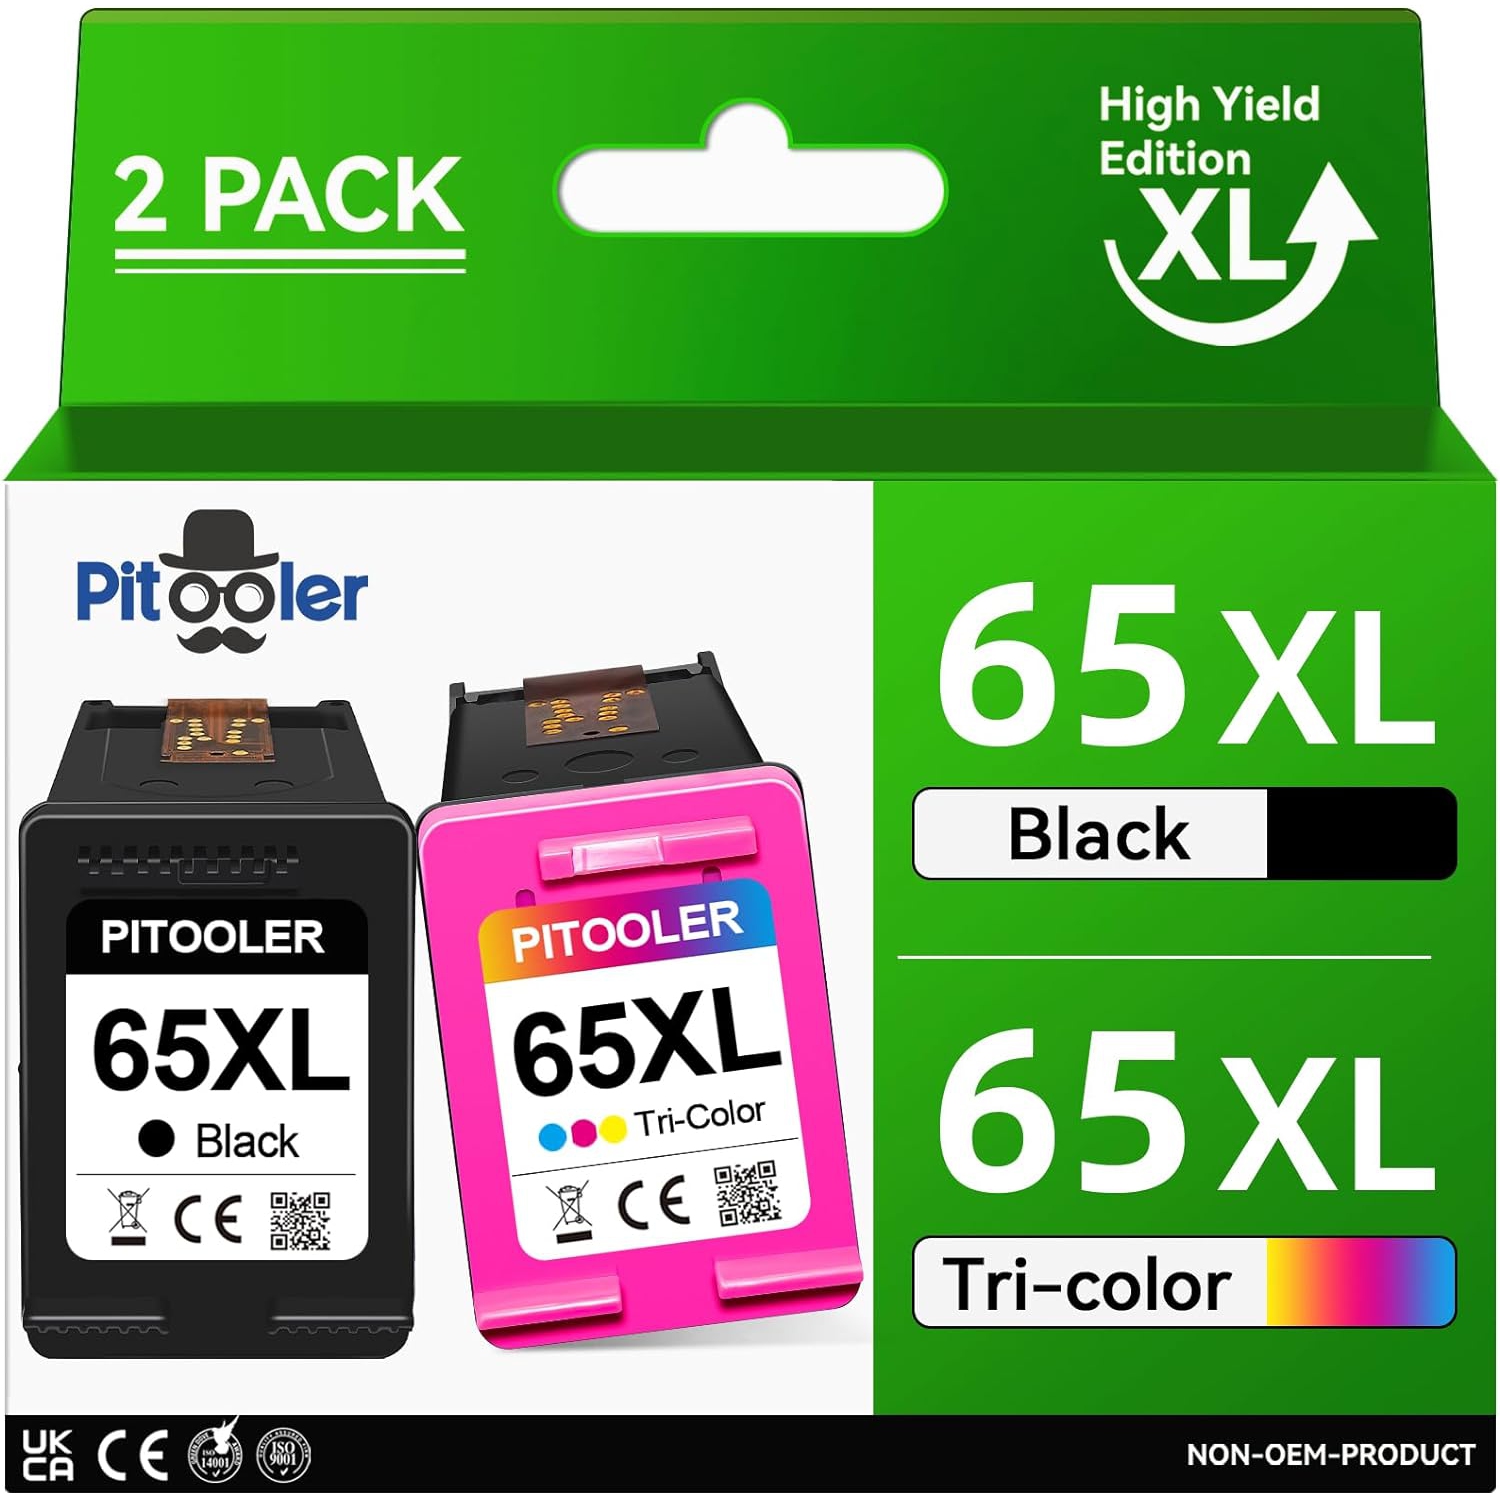 DOLAER High Yield HP 65XL Ink Cartridge Black & Color for HP DeskJet 3755/2655/2600/2652/3772/3752/3700, Envy 5055/5010/5000 Series - 2 Pack